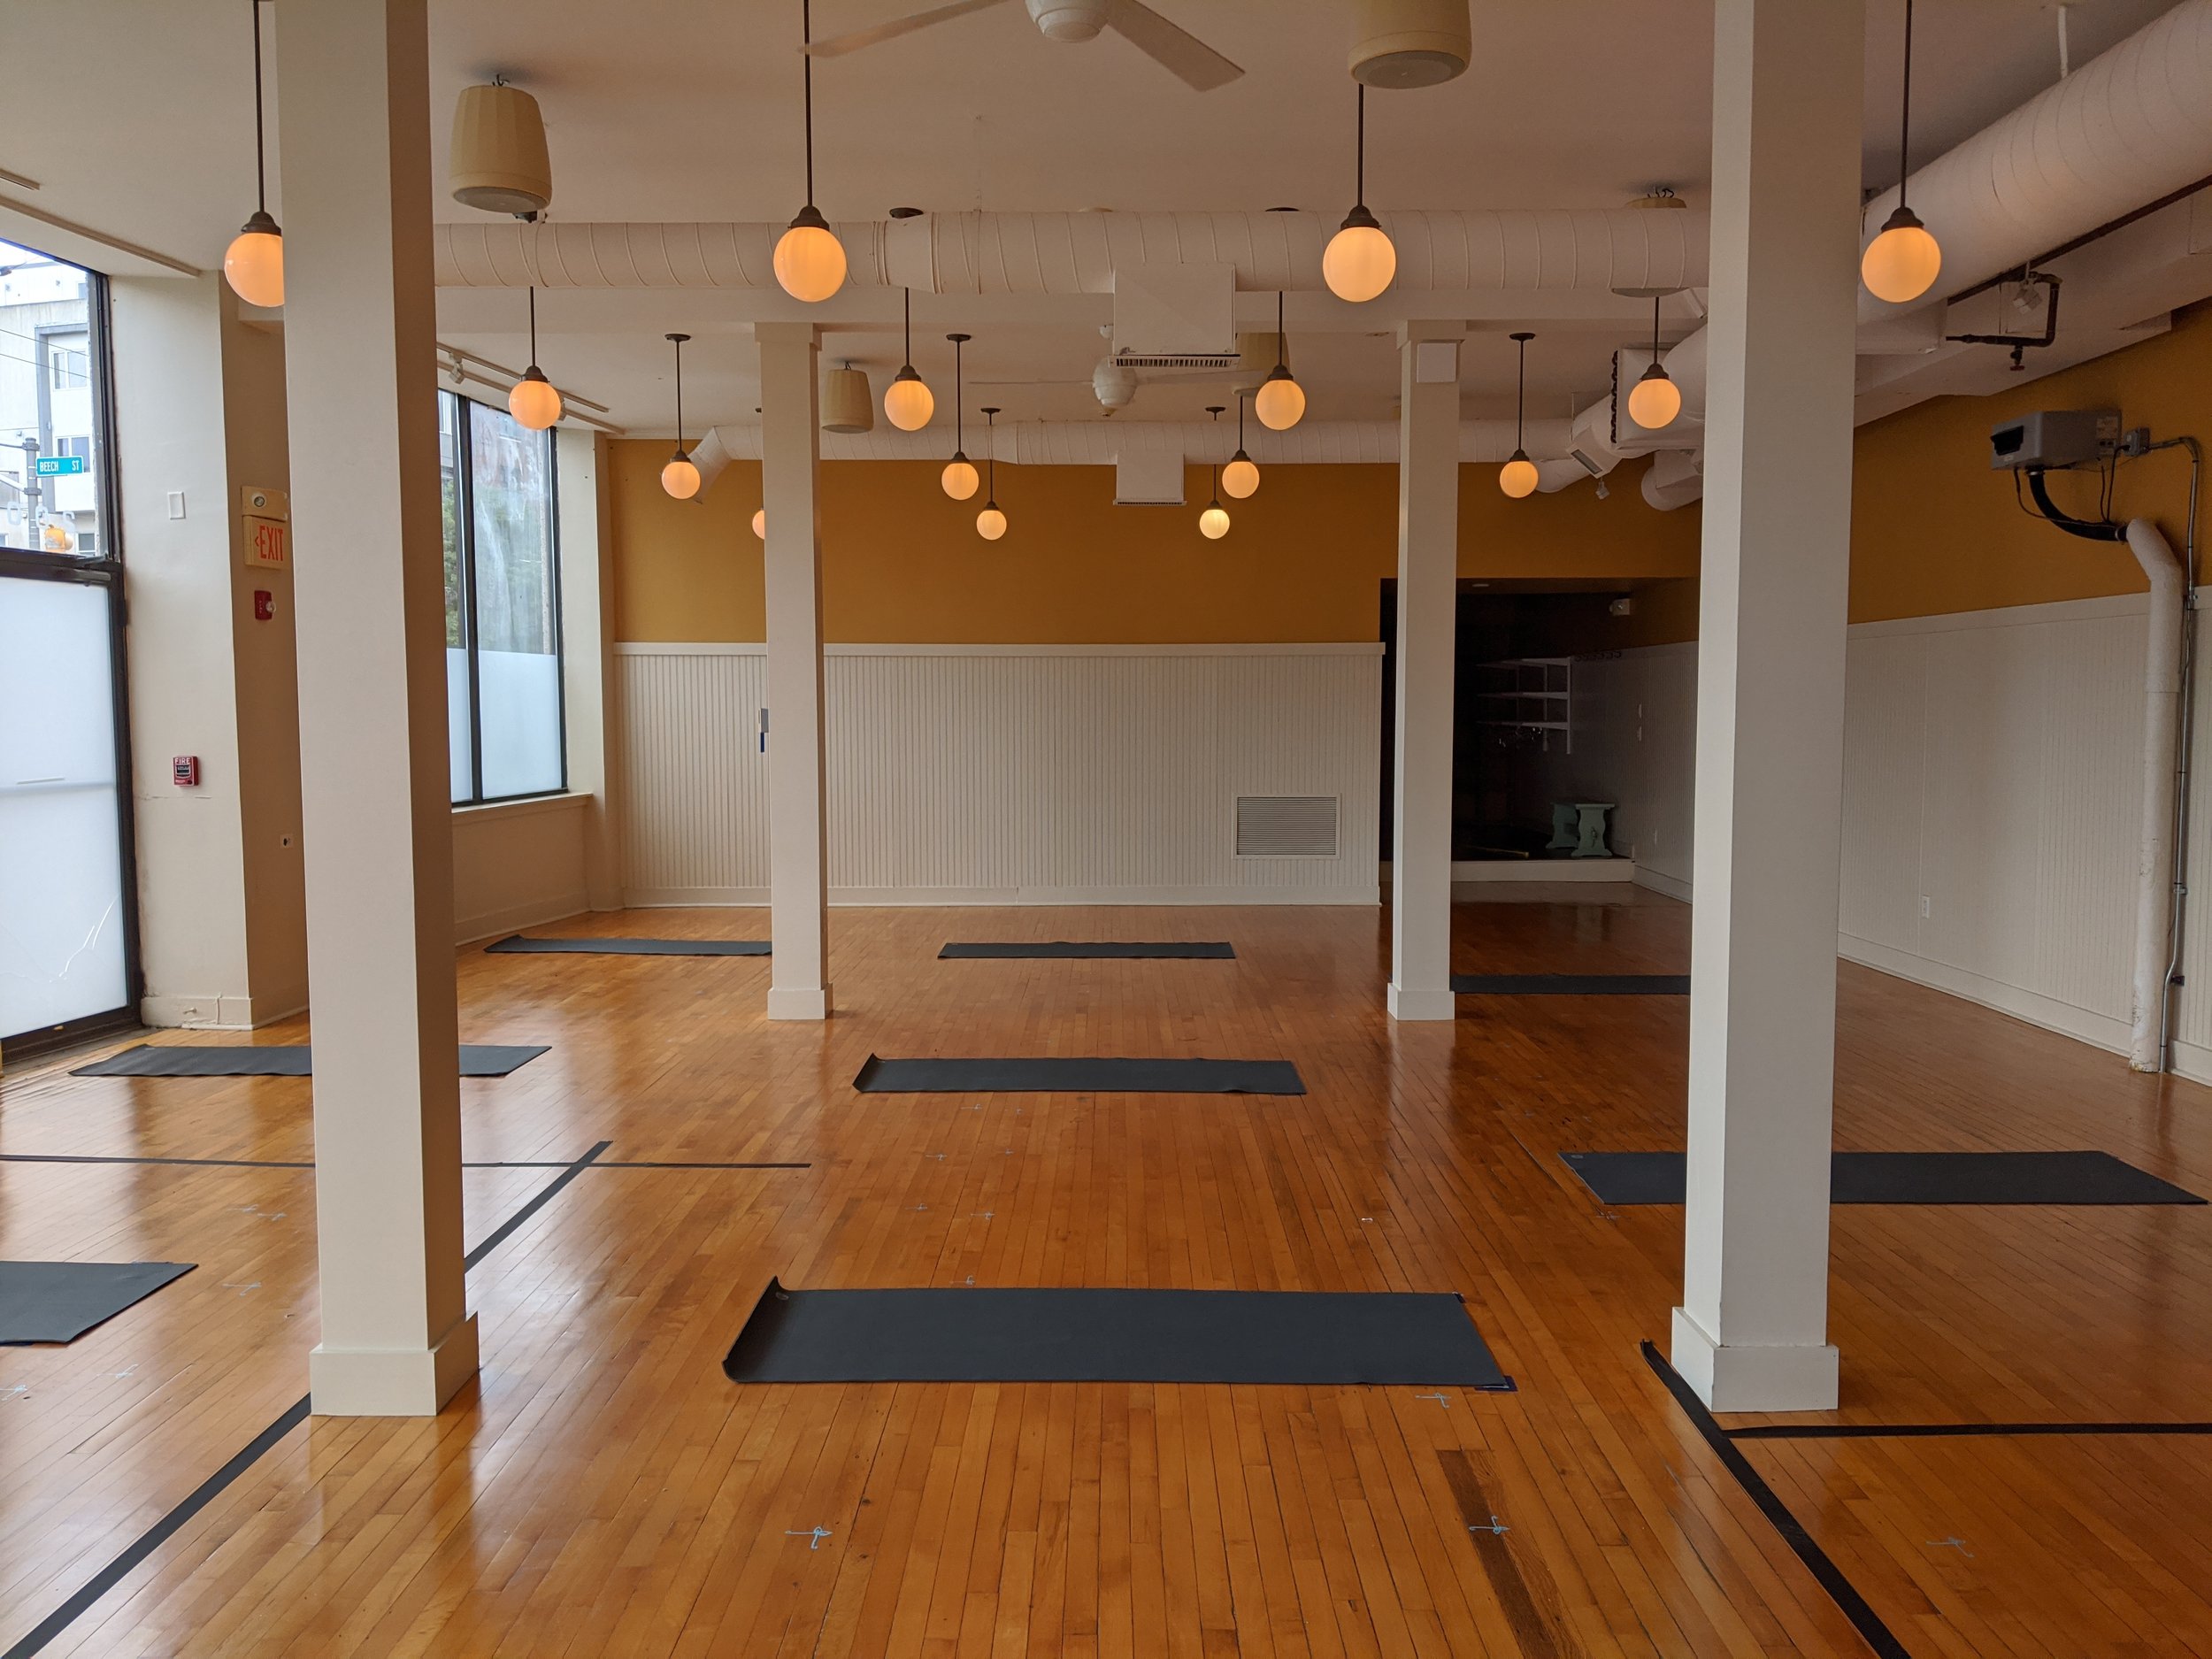 Porter Square Yoga Studio  Boston's Best Yoga — Down Under School of Yoga